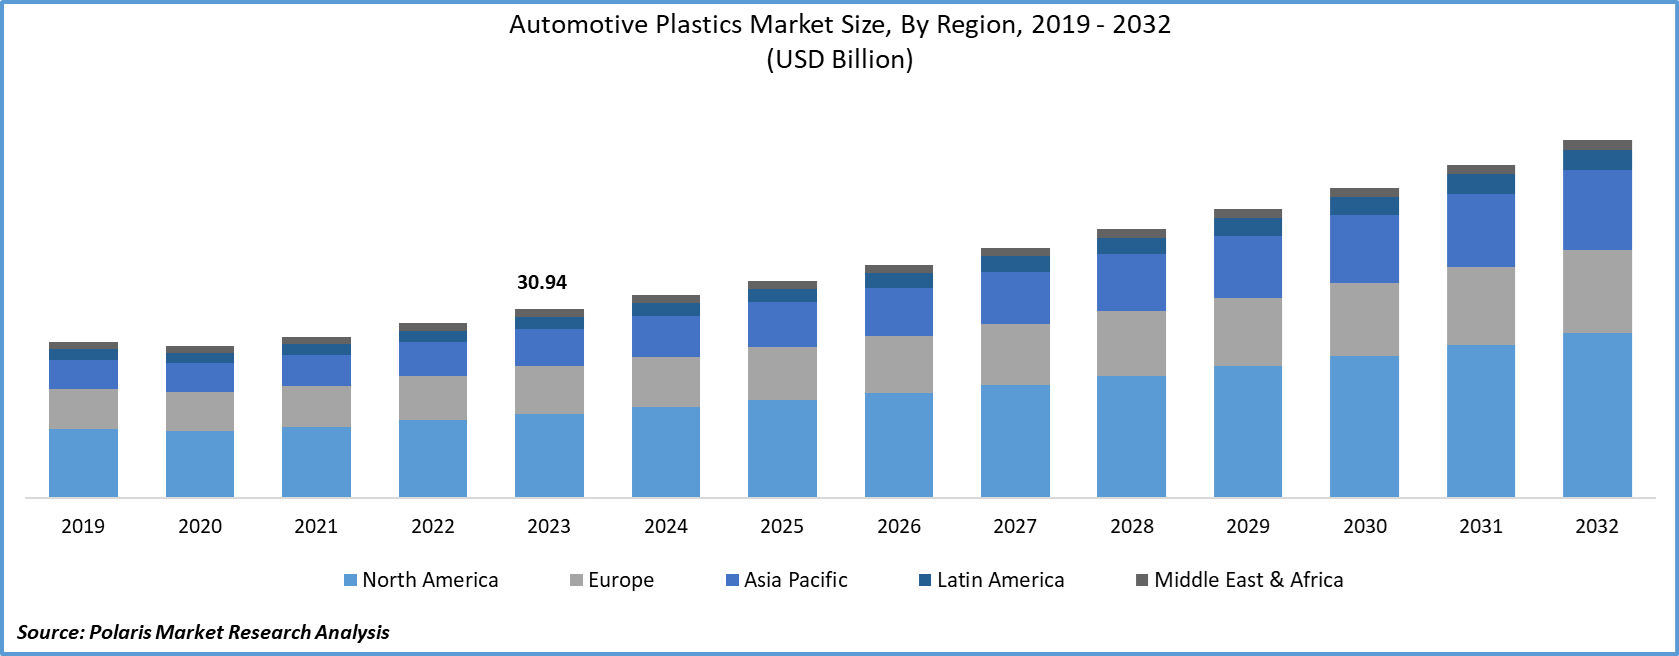 Automotive Plastics Market Size